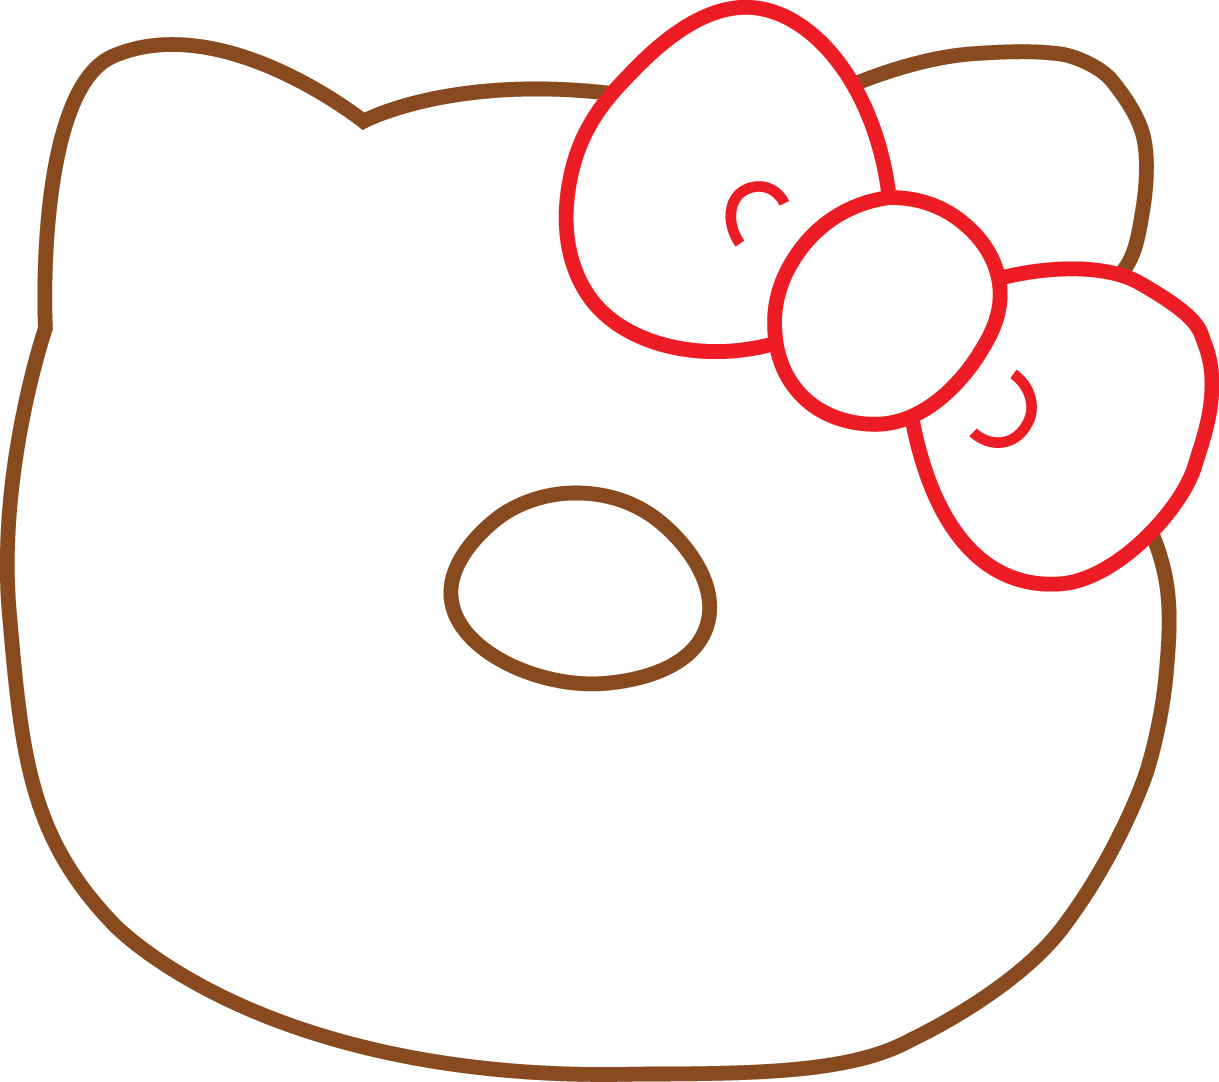 Design a Hello Kitty jumbo donut squishy